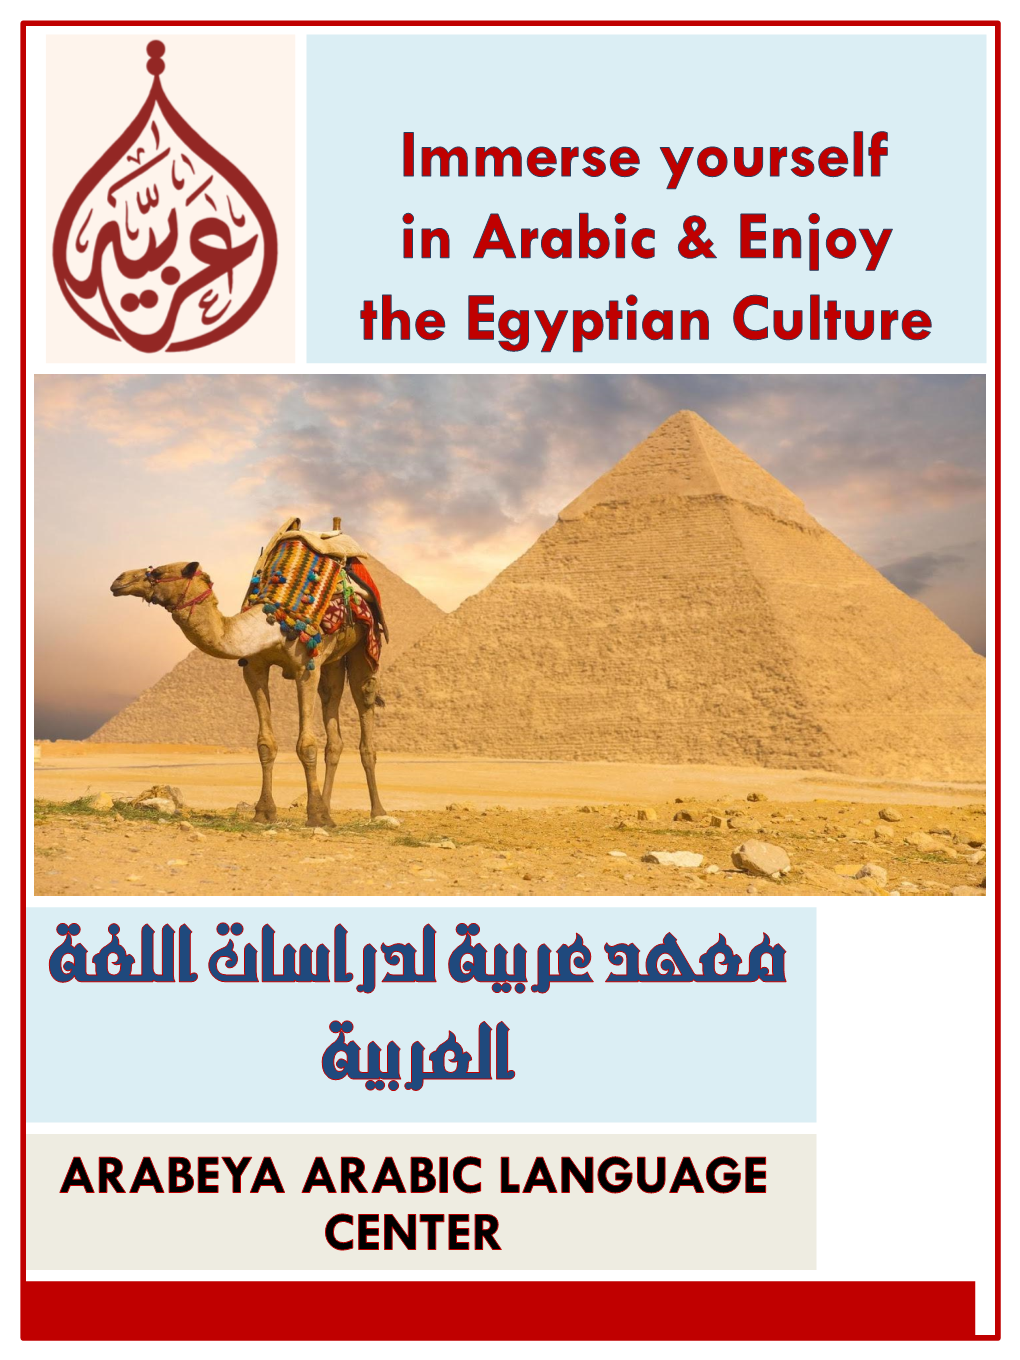 Arabeya Arabic Language Center Web: Email : Info@Arabeya.Org Viber & Whats App: 002 0100 210 2538 Mobile: 002 (012) 22 845 140